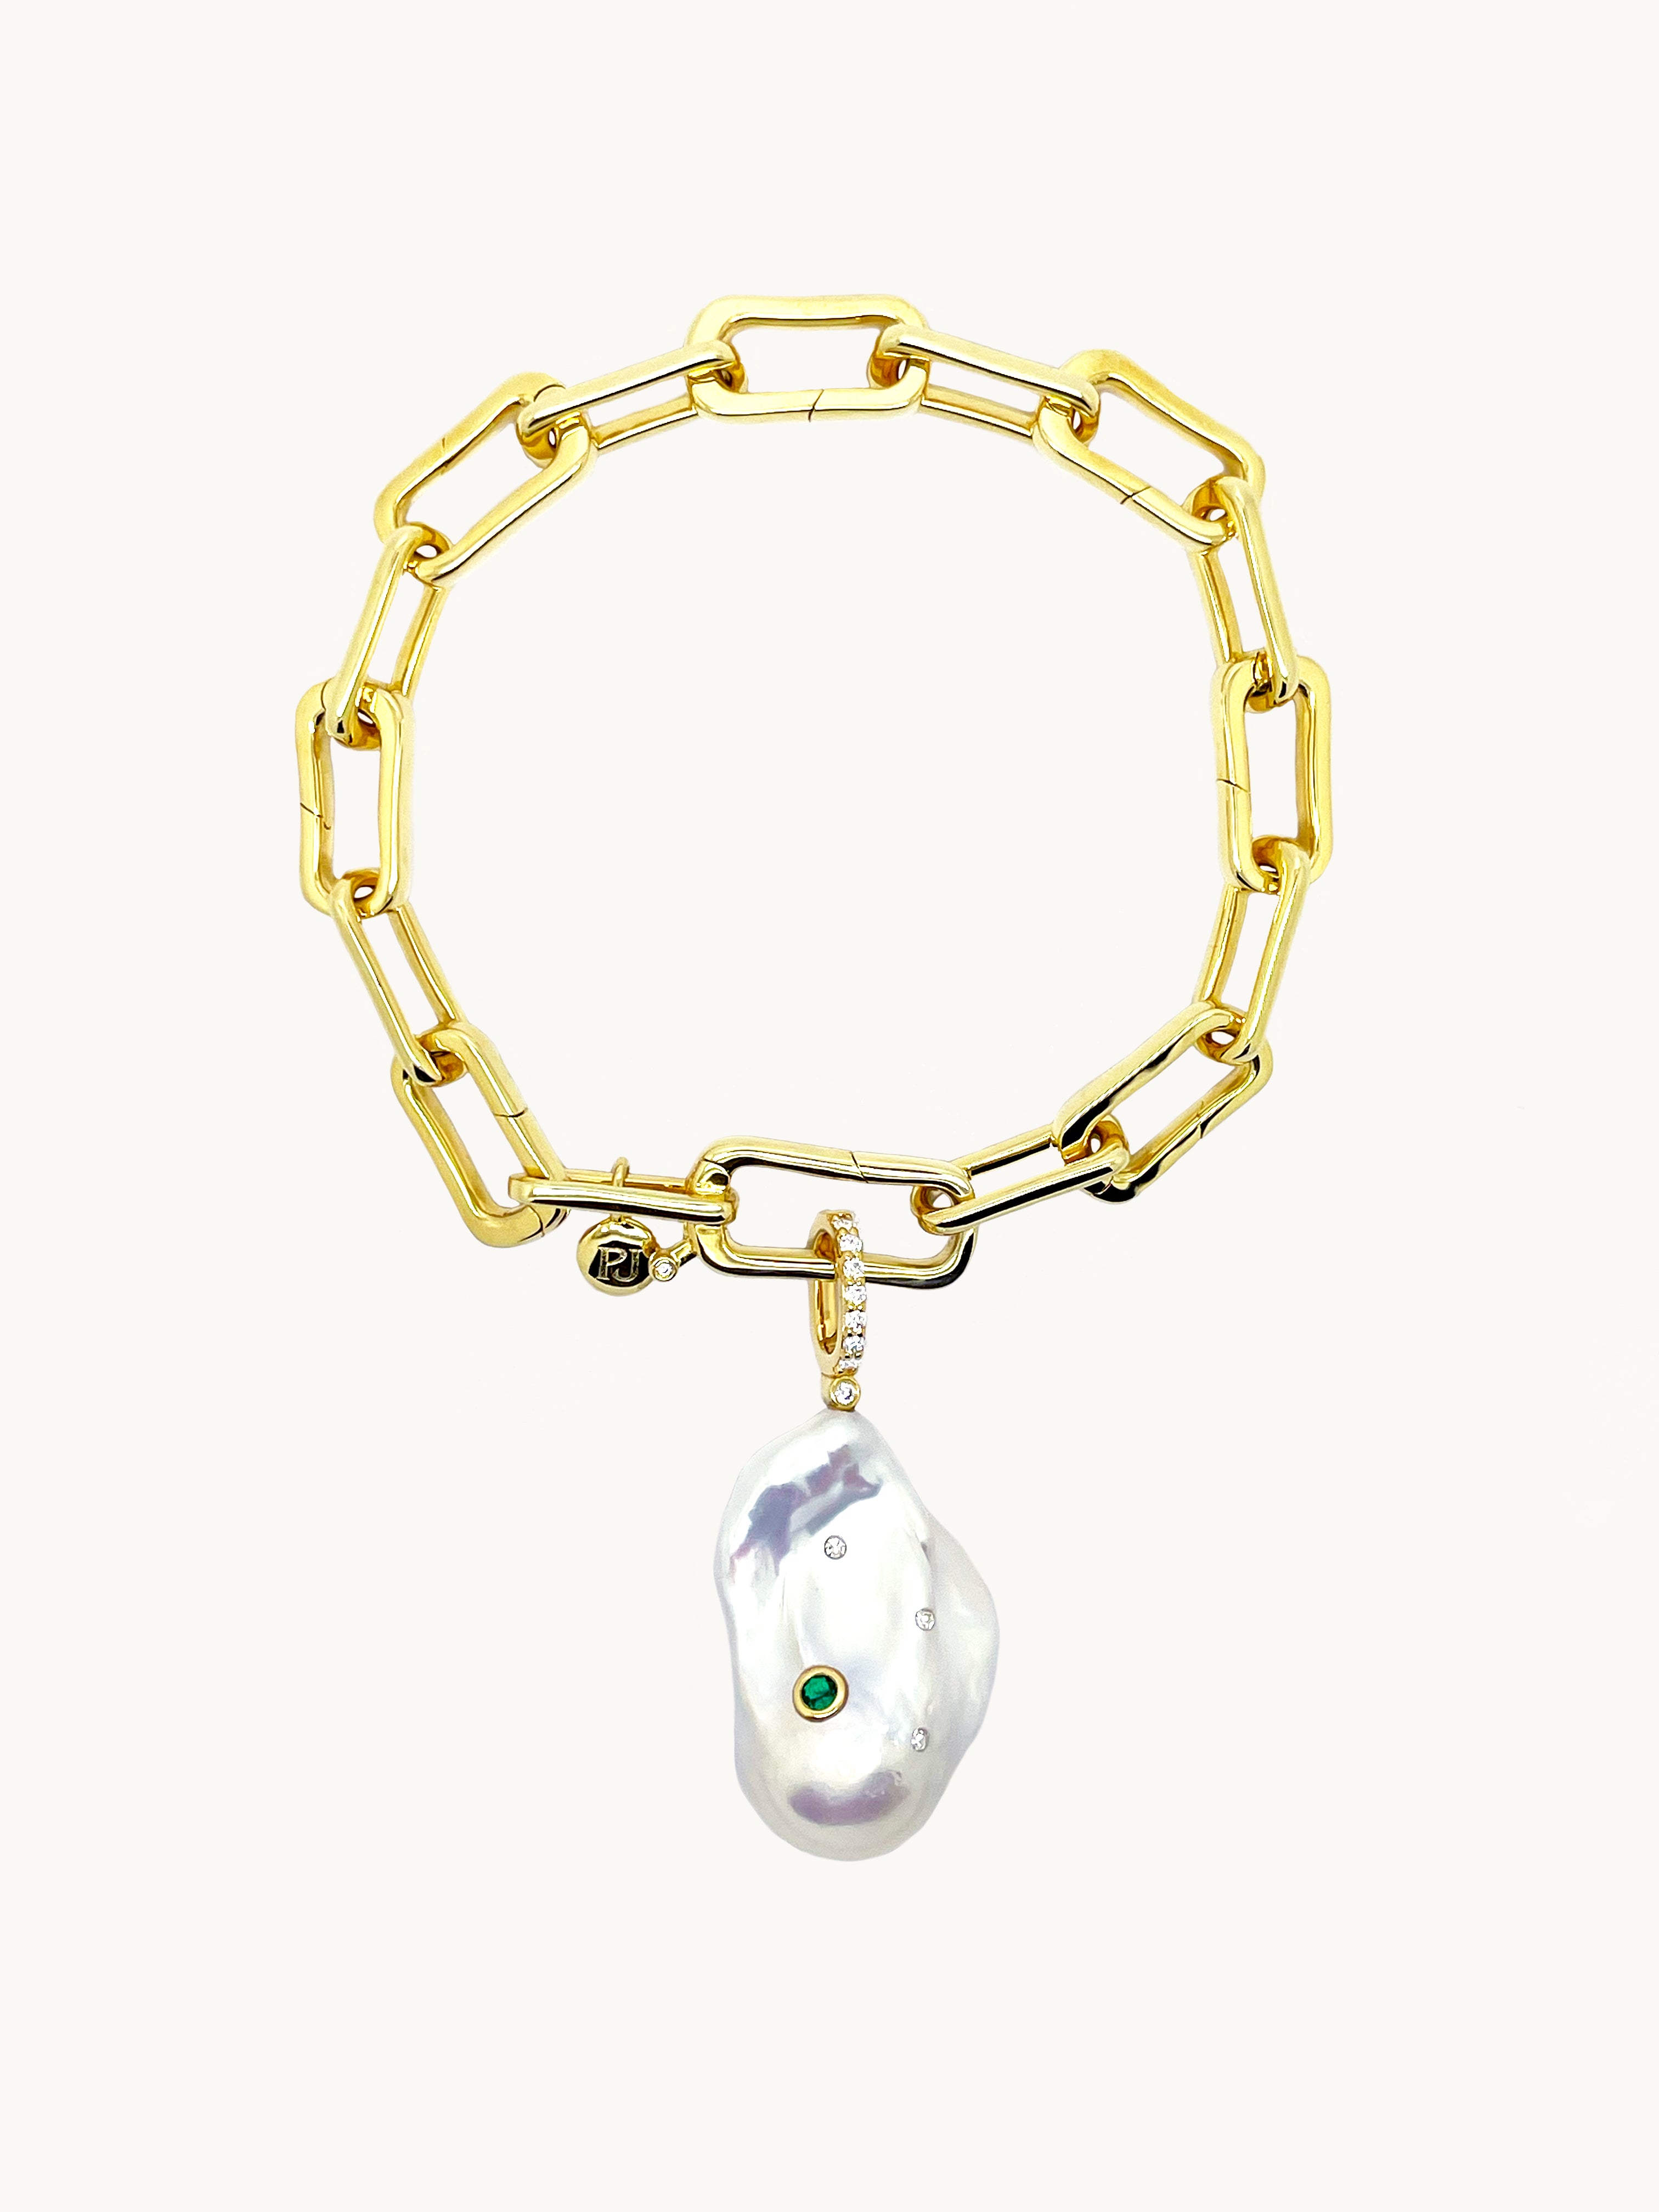 Link & Chain Charm Bracelet in 18k Gold Vermeil